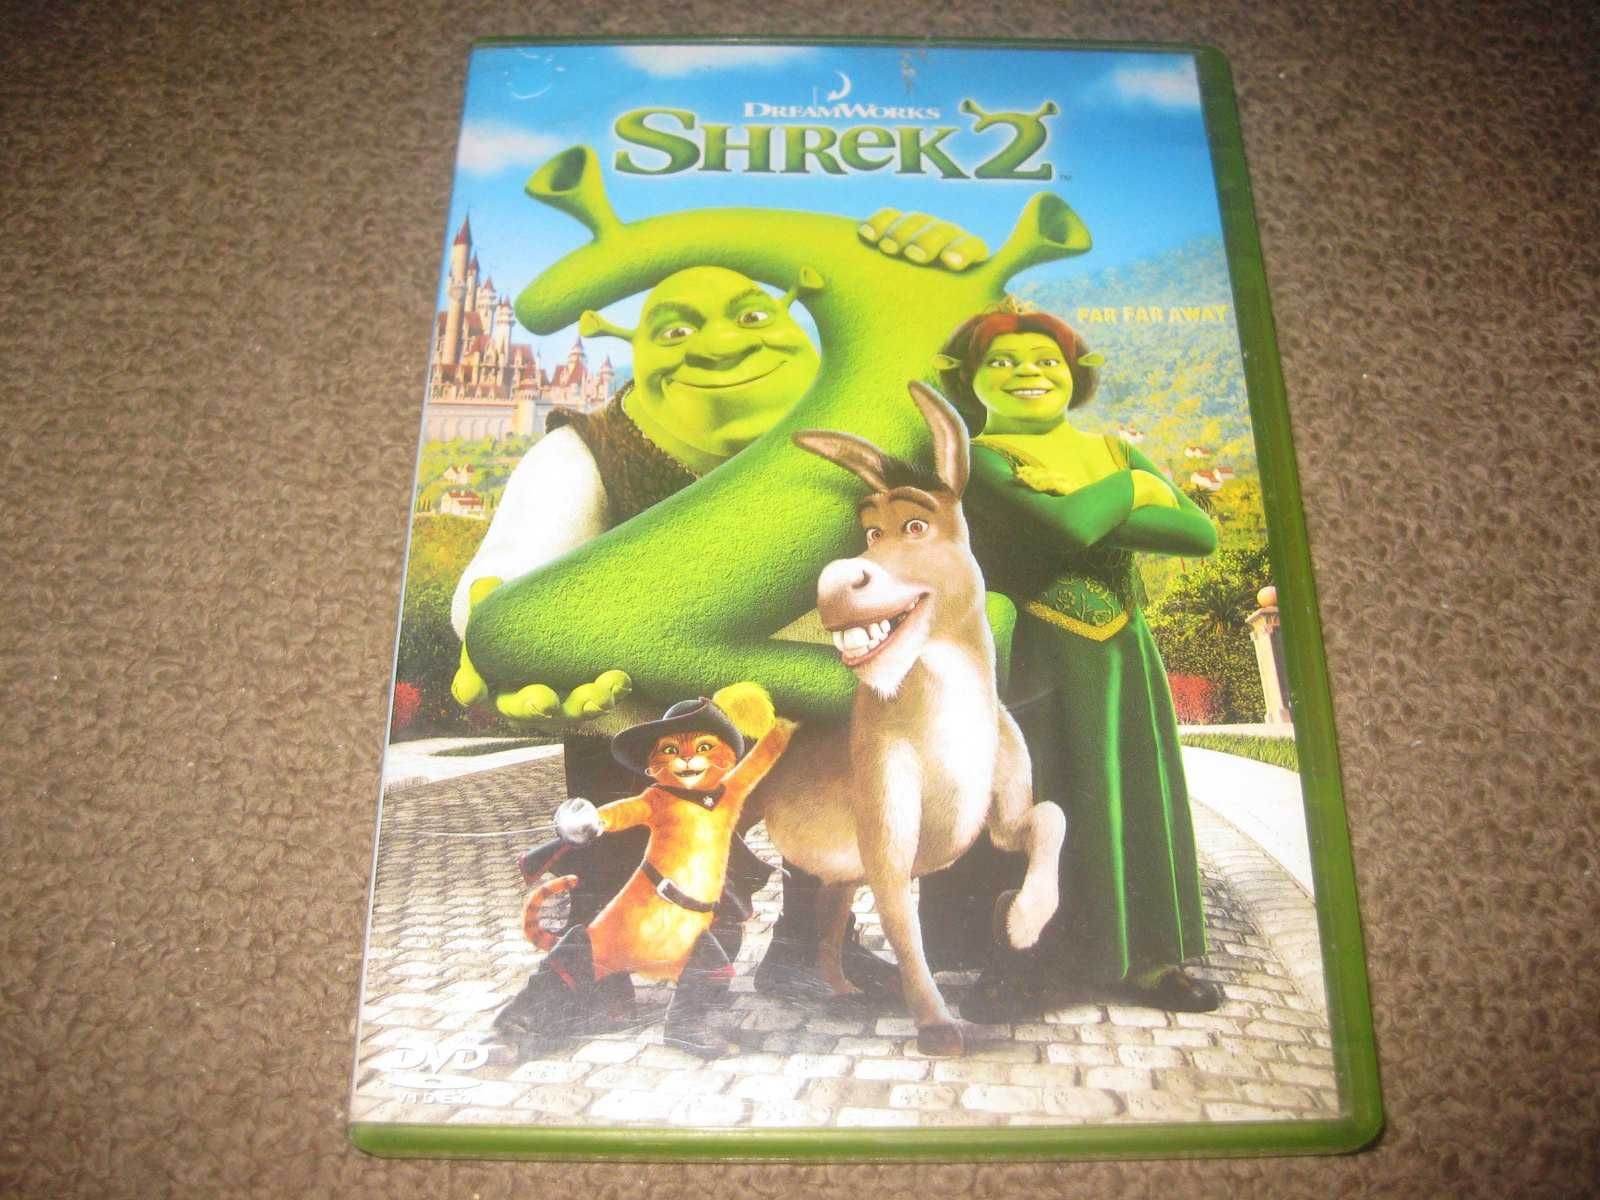 DVD "Shrek 2" da DreamWorks Animation